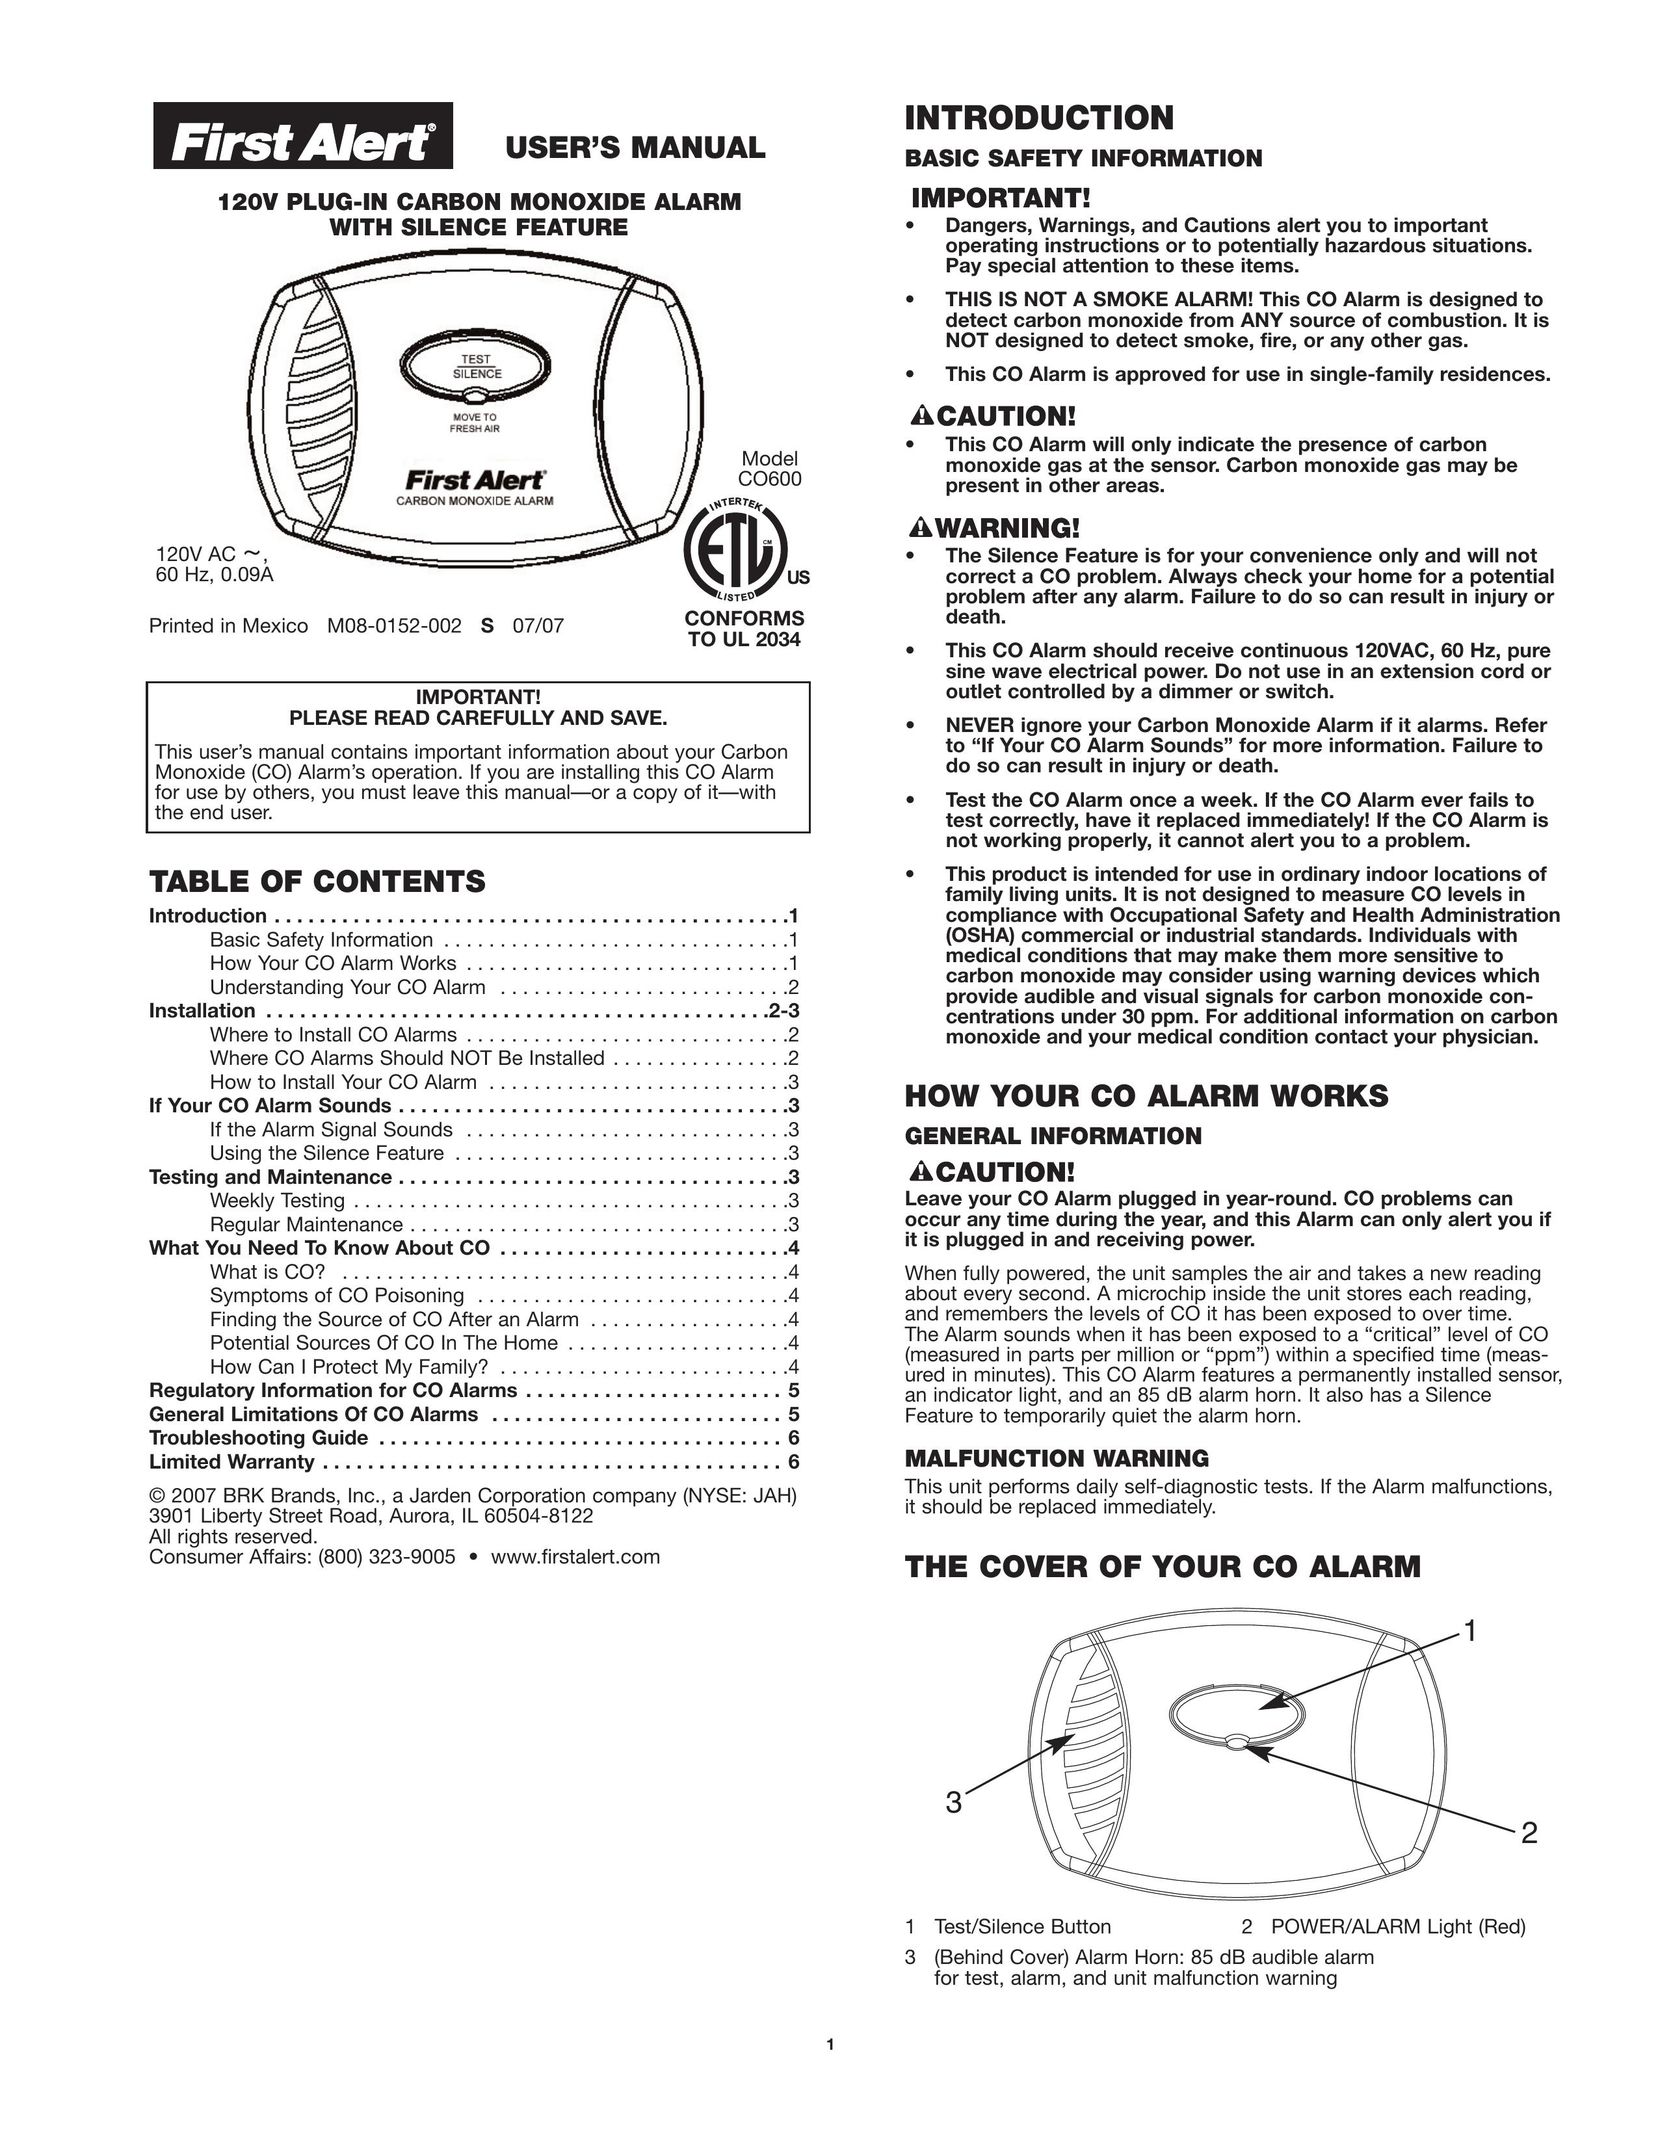 First Alert CO600 Carbon Monoxide Alarm User Manual